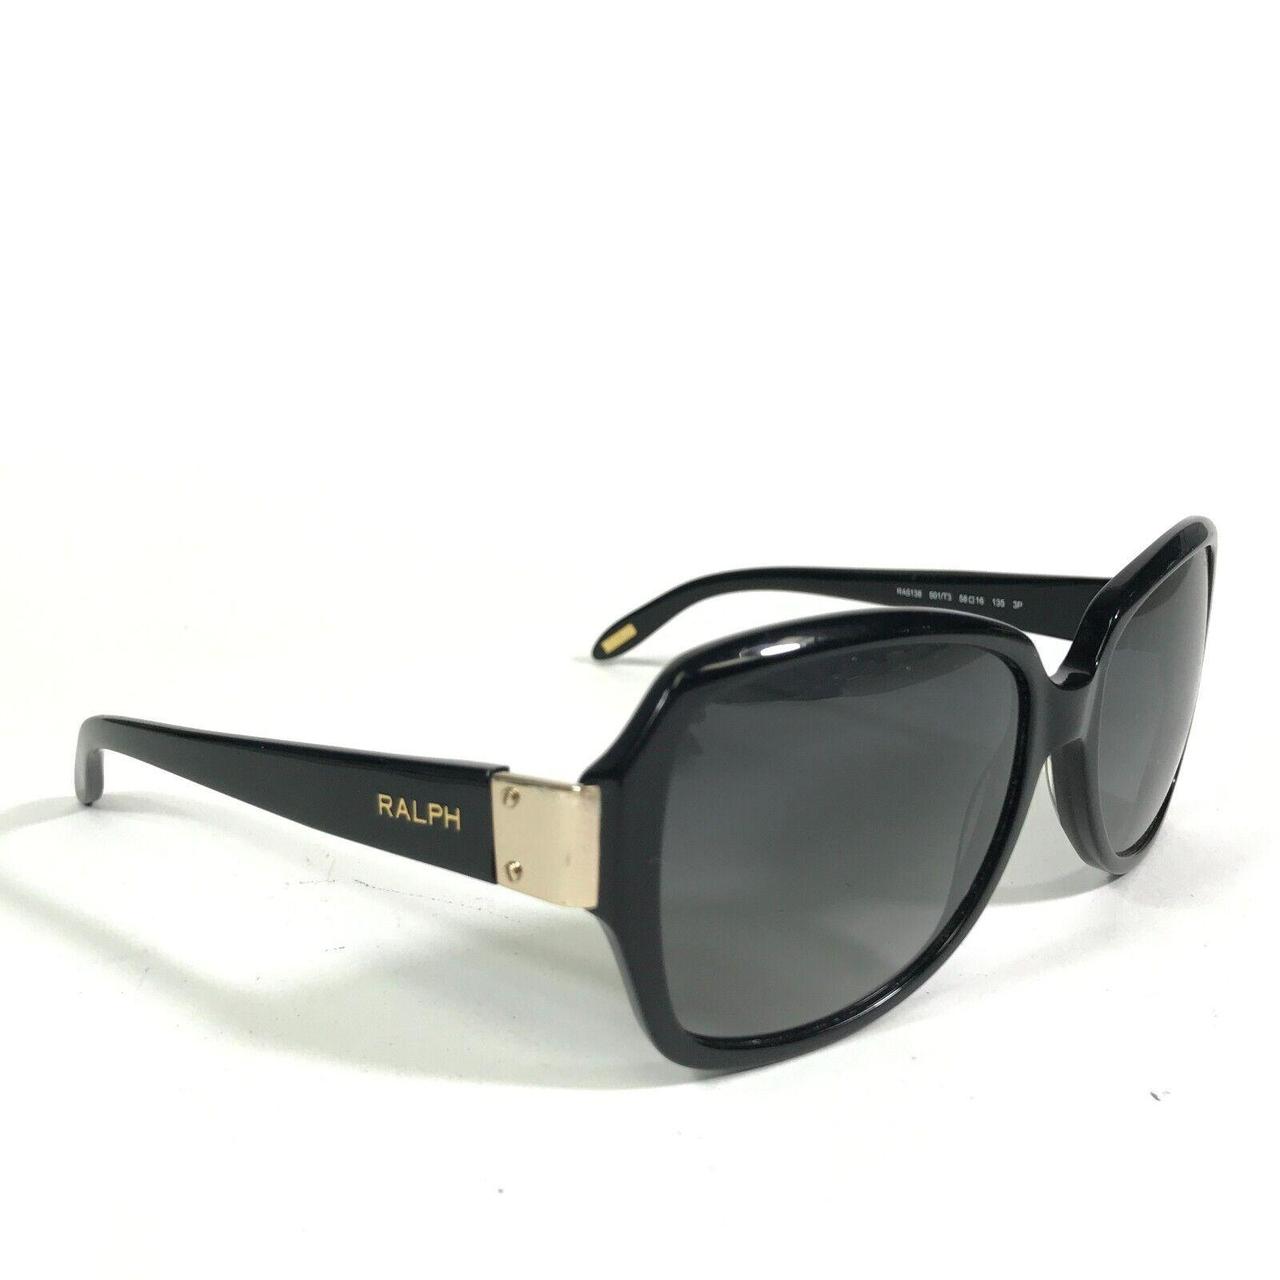 Ralph Lauren Women's Black and Blue Sunglasses (3)